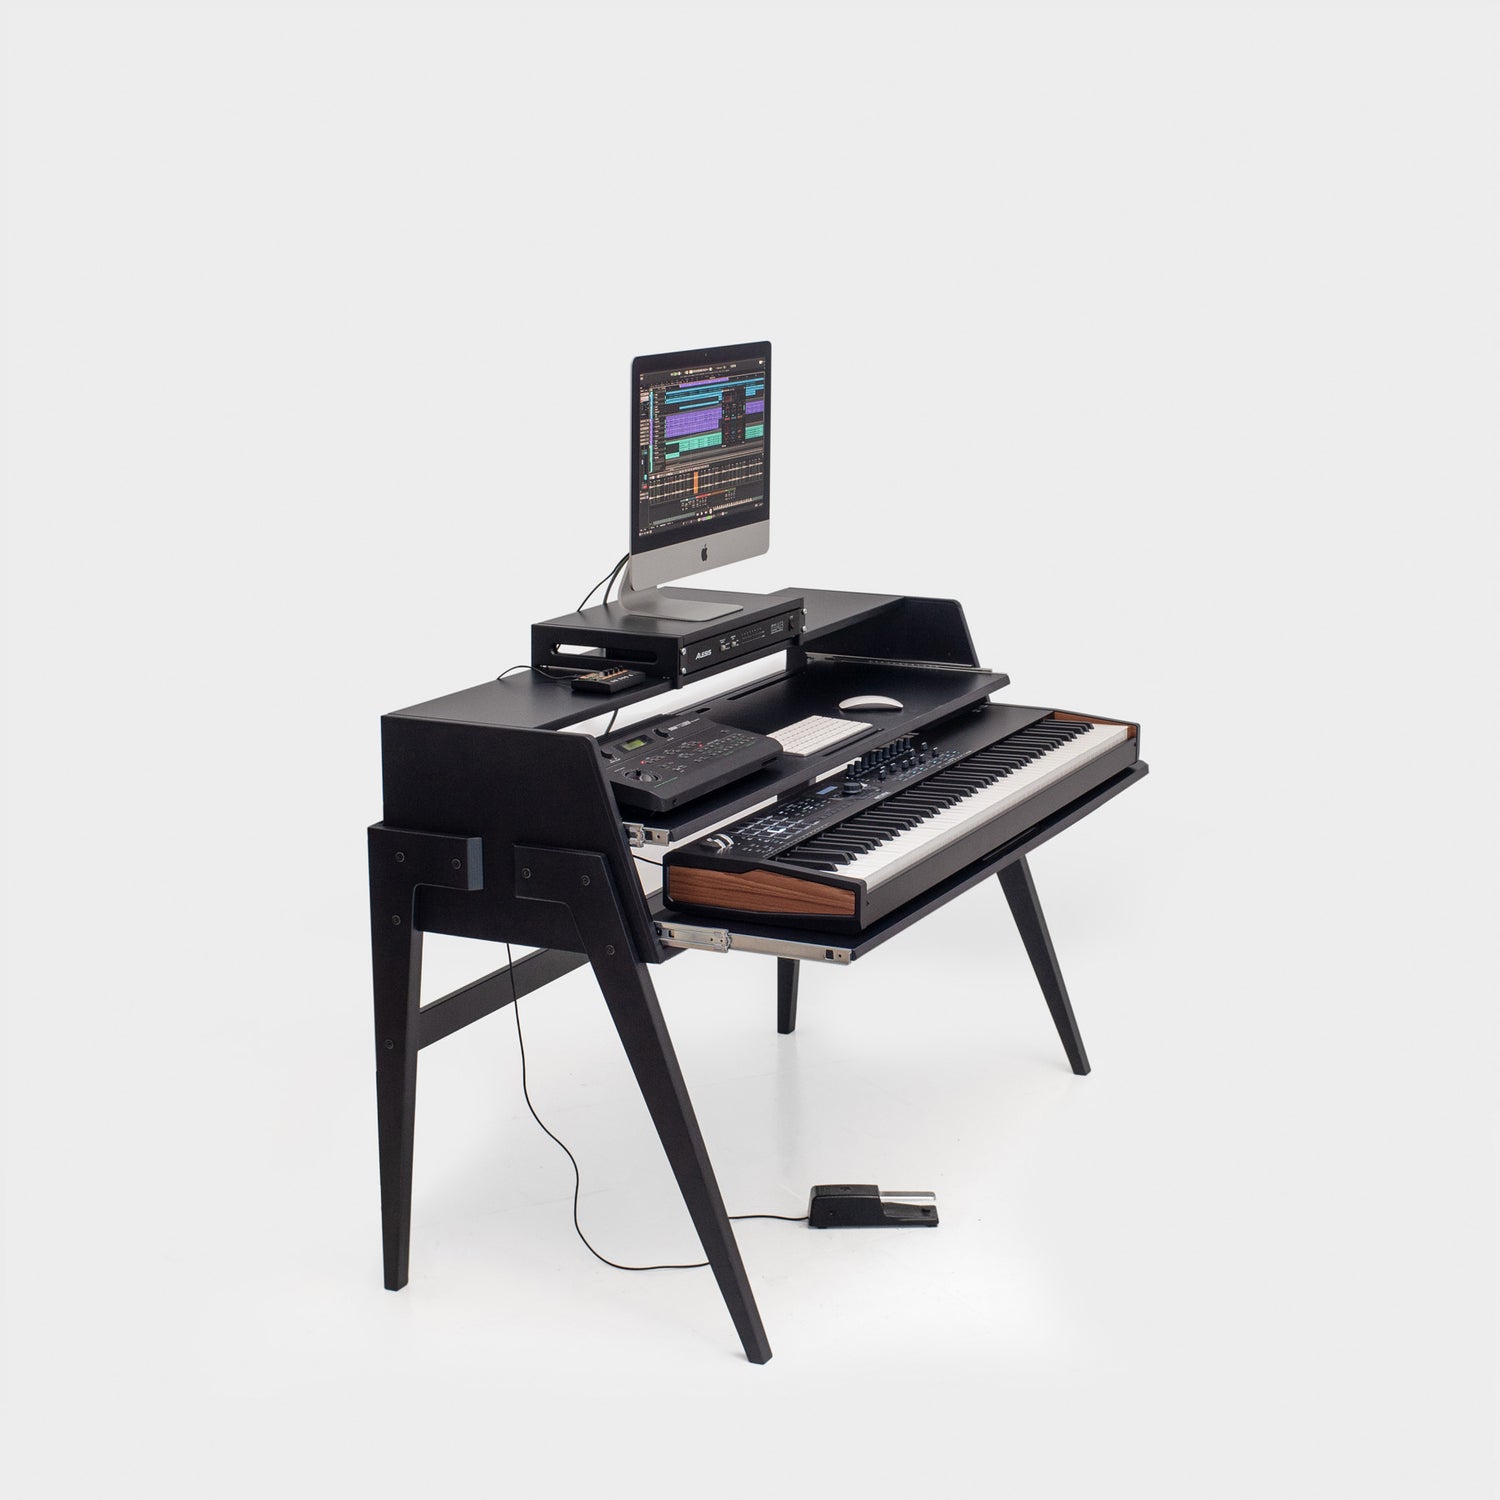 Compact 88 studio desk in black